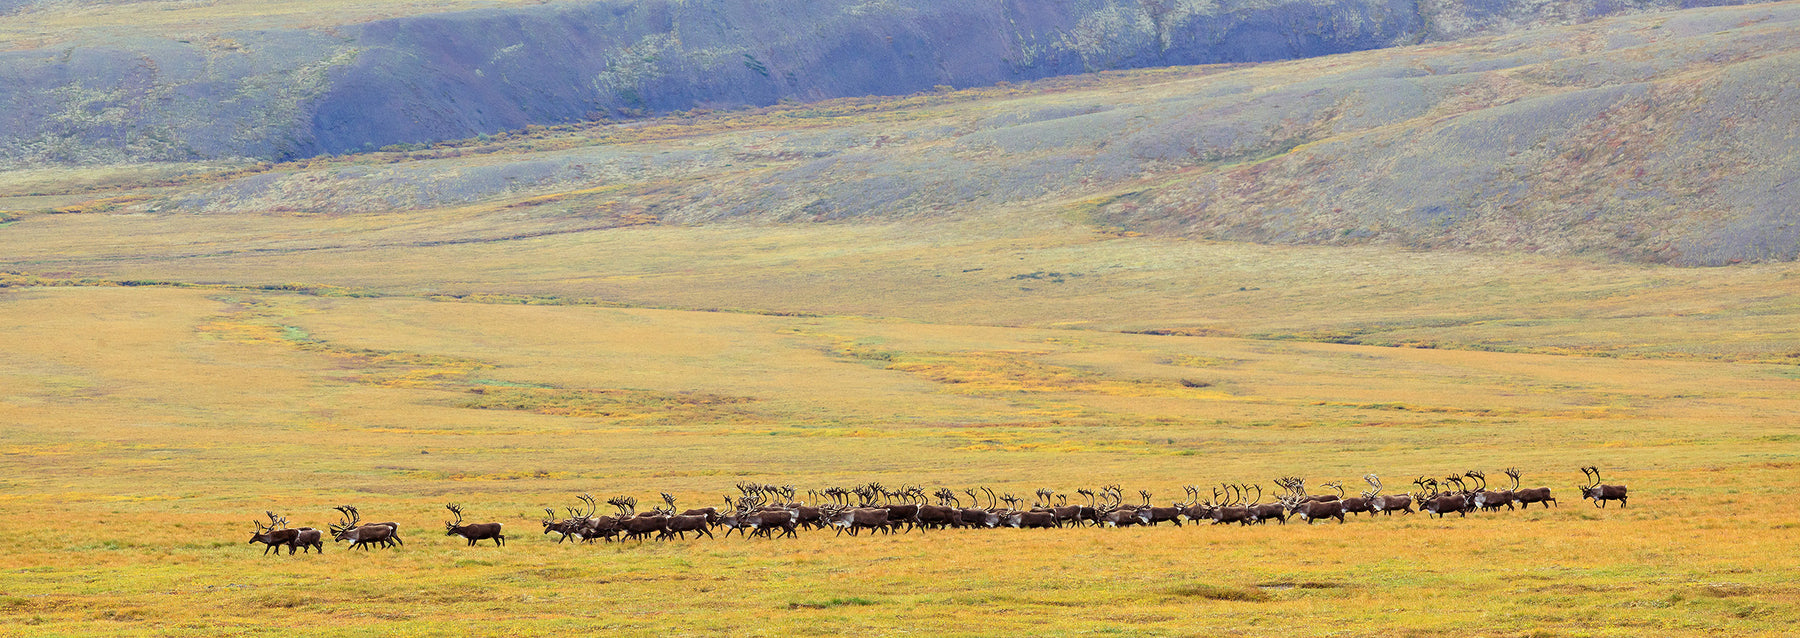 Barrenground caribou photography in the Yukon - John E. Marriott